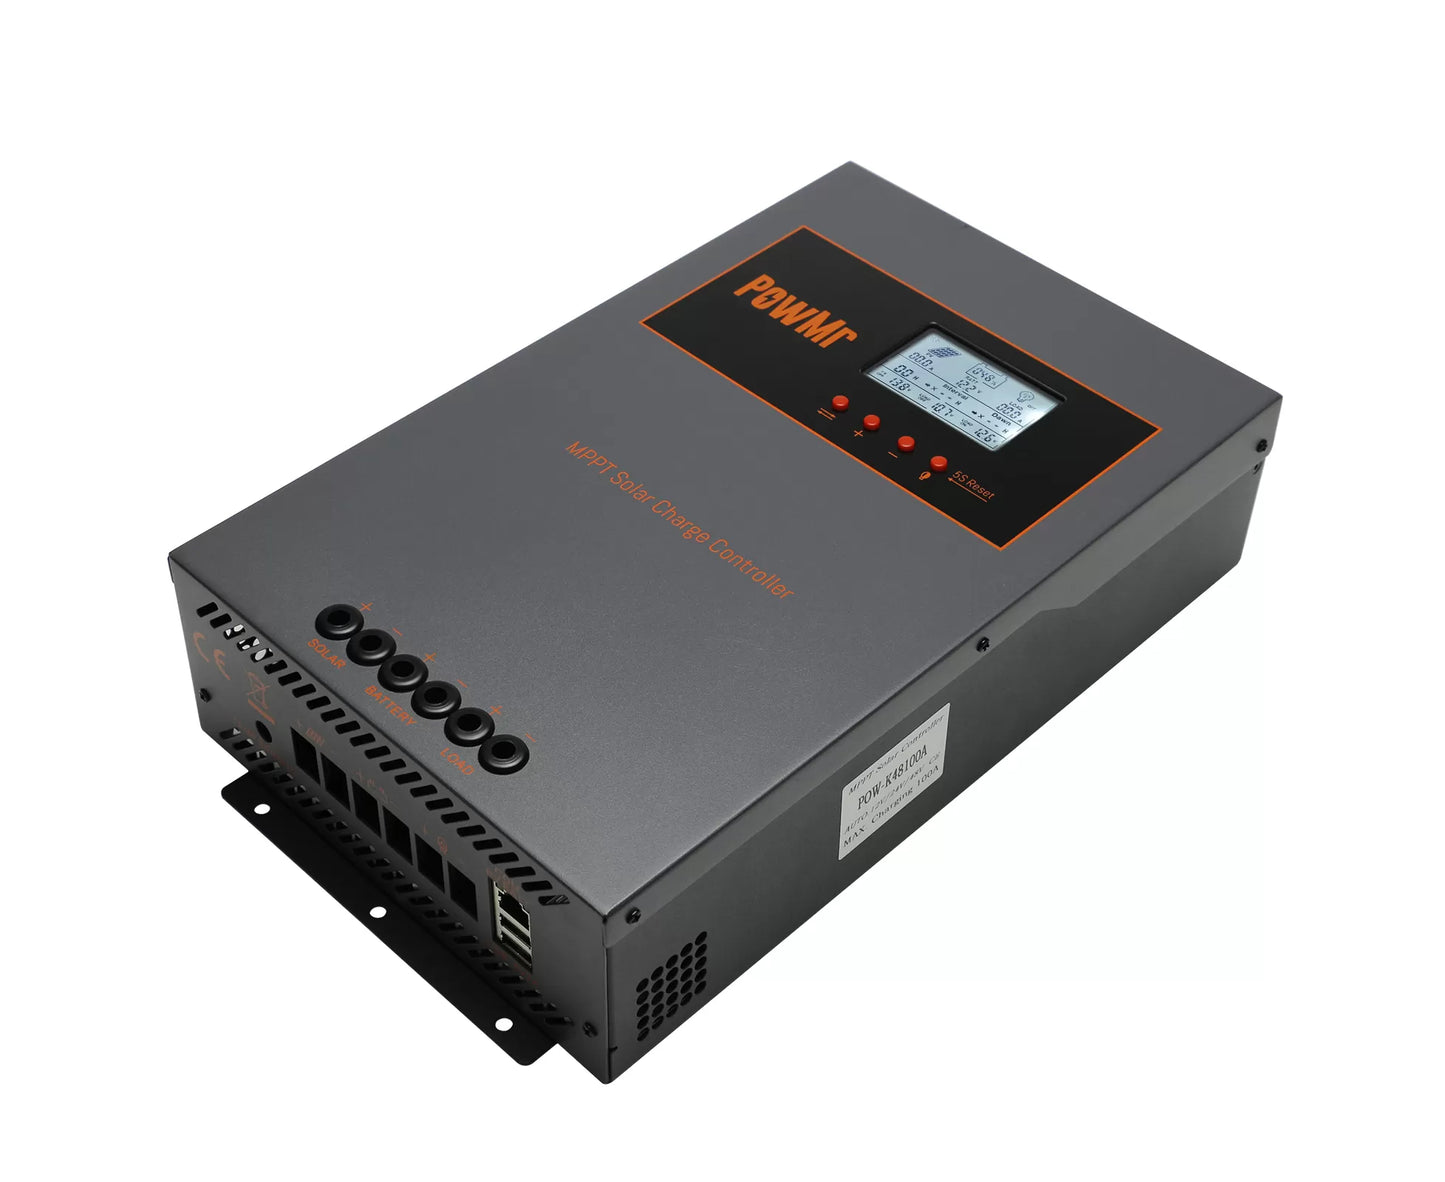 POW-K48100A – PowMr 100 A MPPT-Solarladeregler 12/24/48 V DC mit automatischer Erkennung